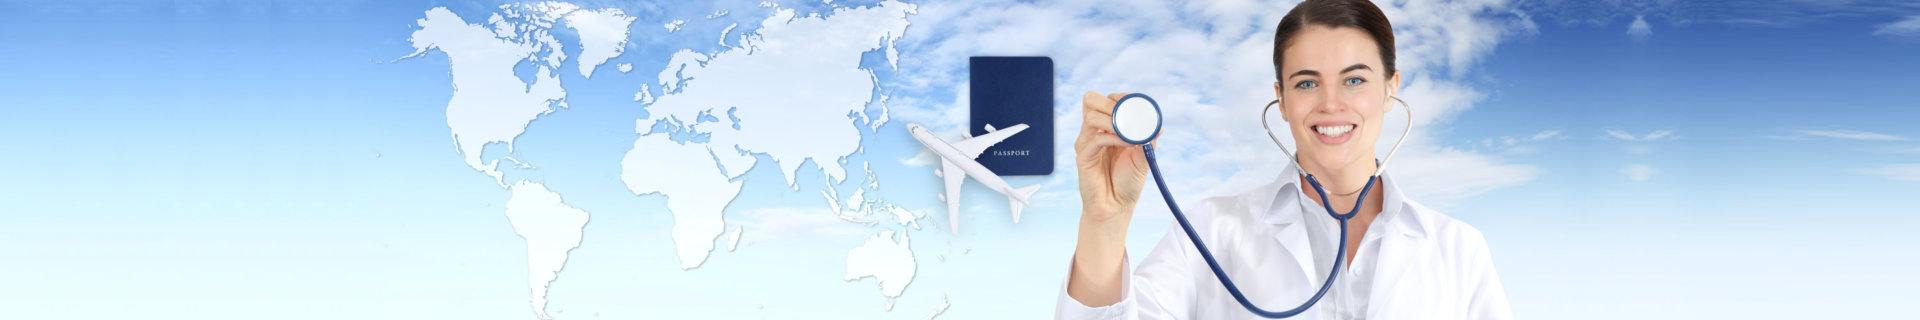 International travel medical insurance concept